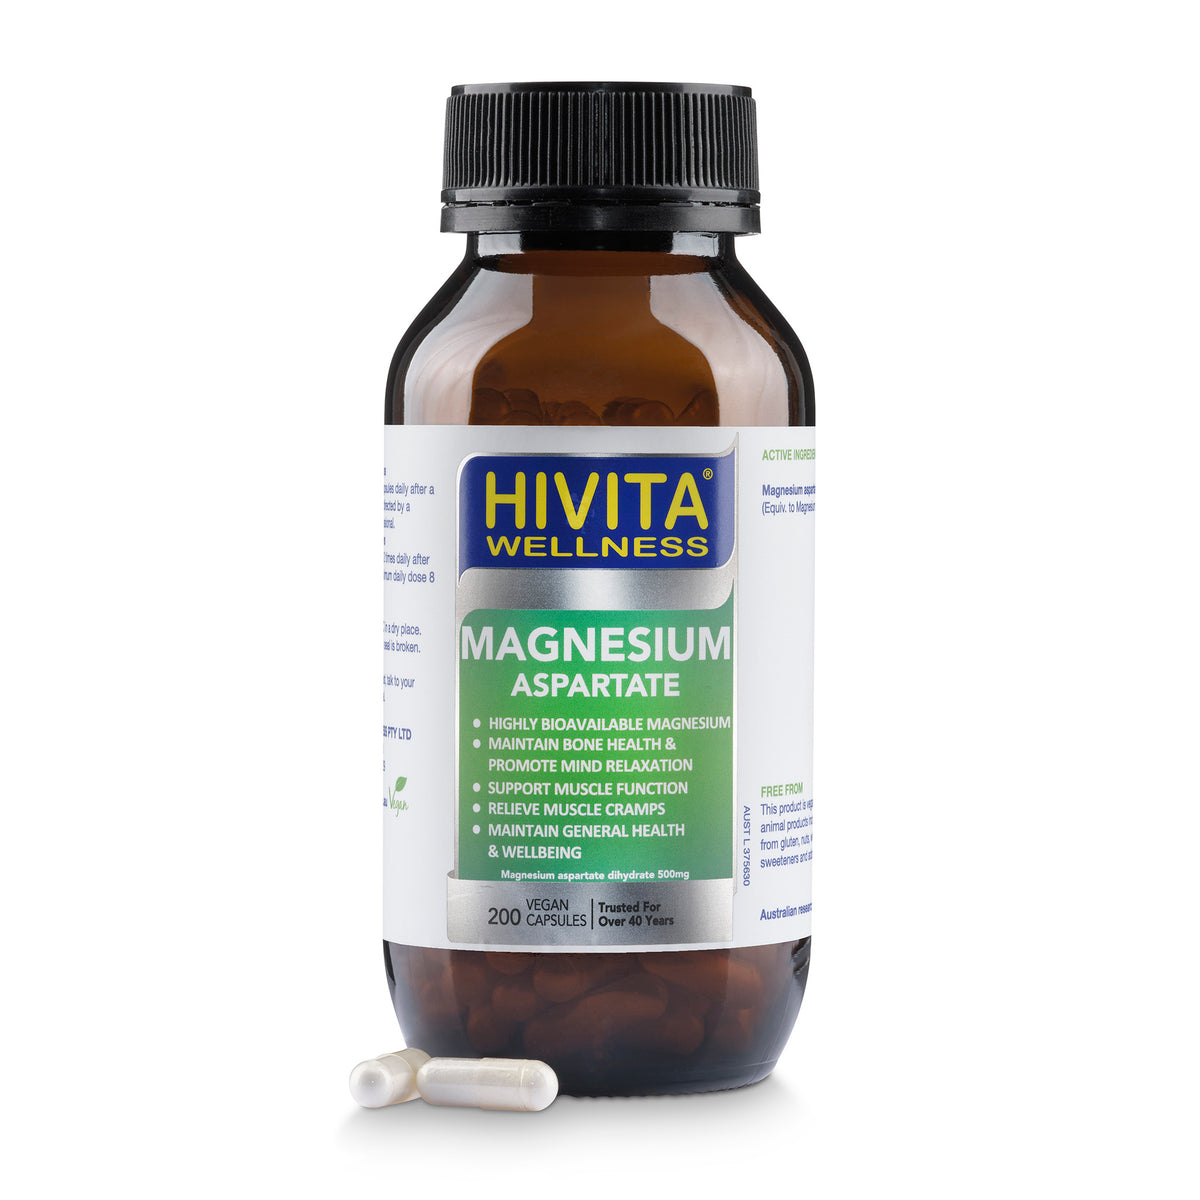 HIVITA Wellness Magnesium Aspartate High Absorption 200 capsules